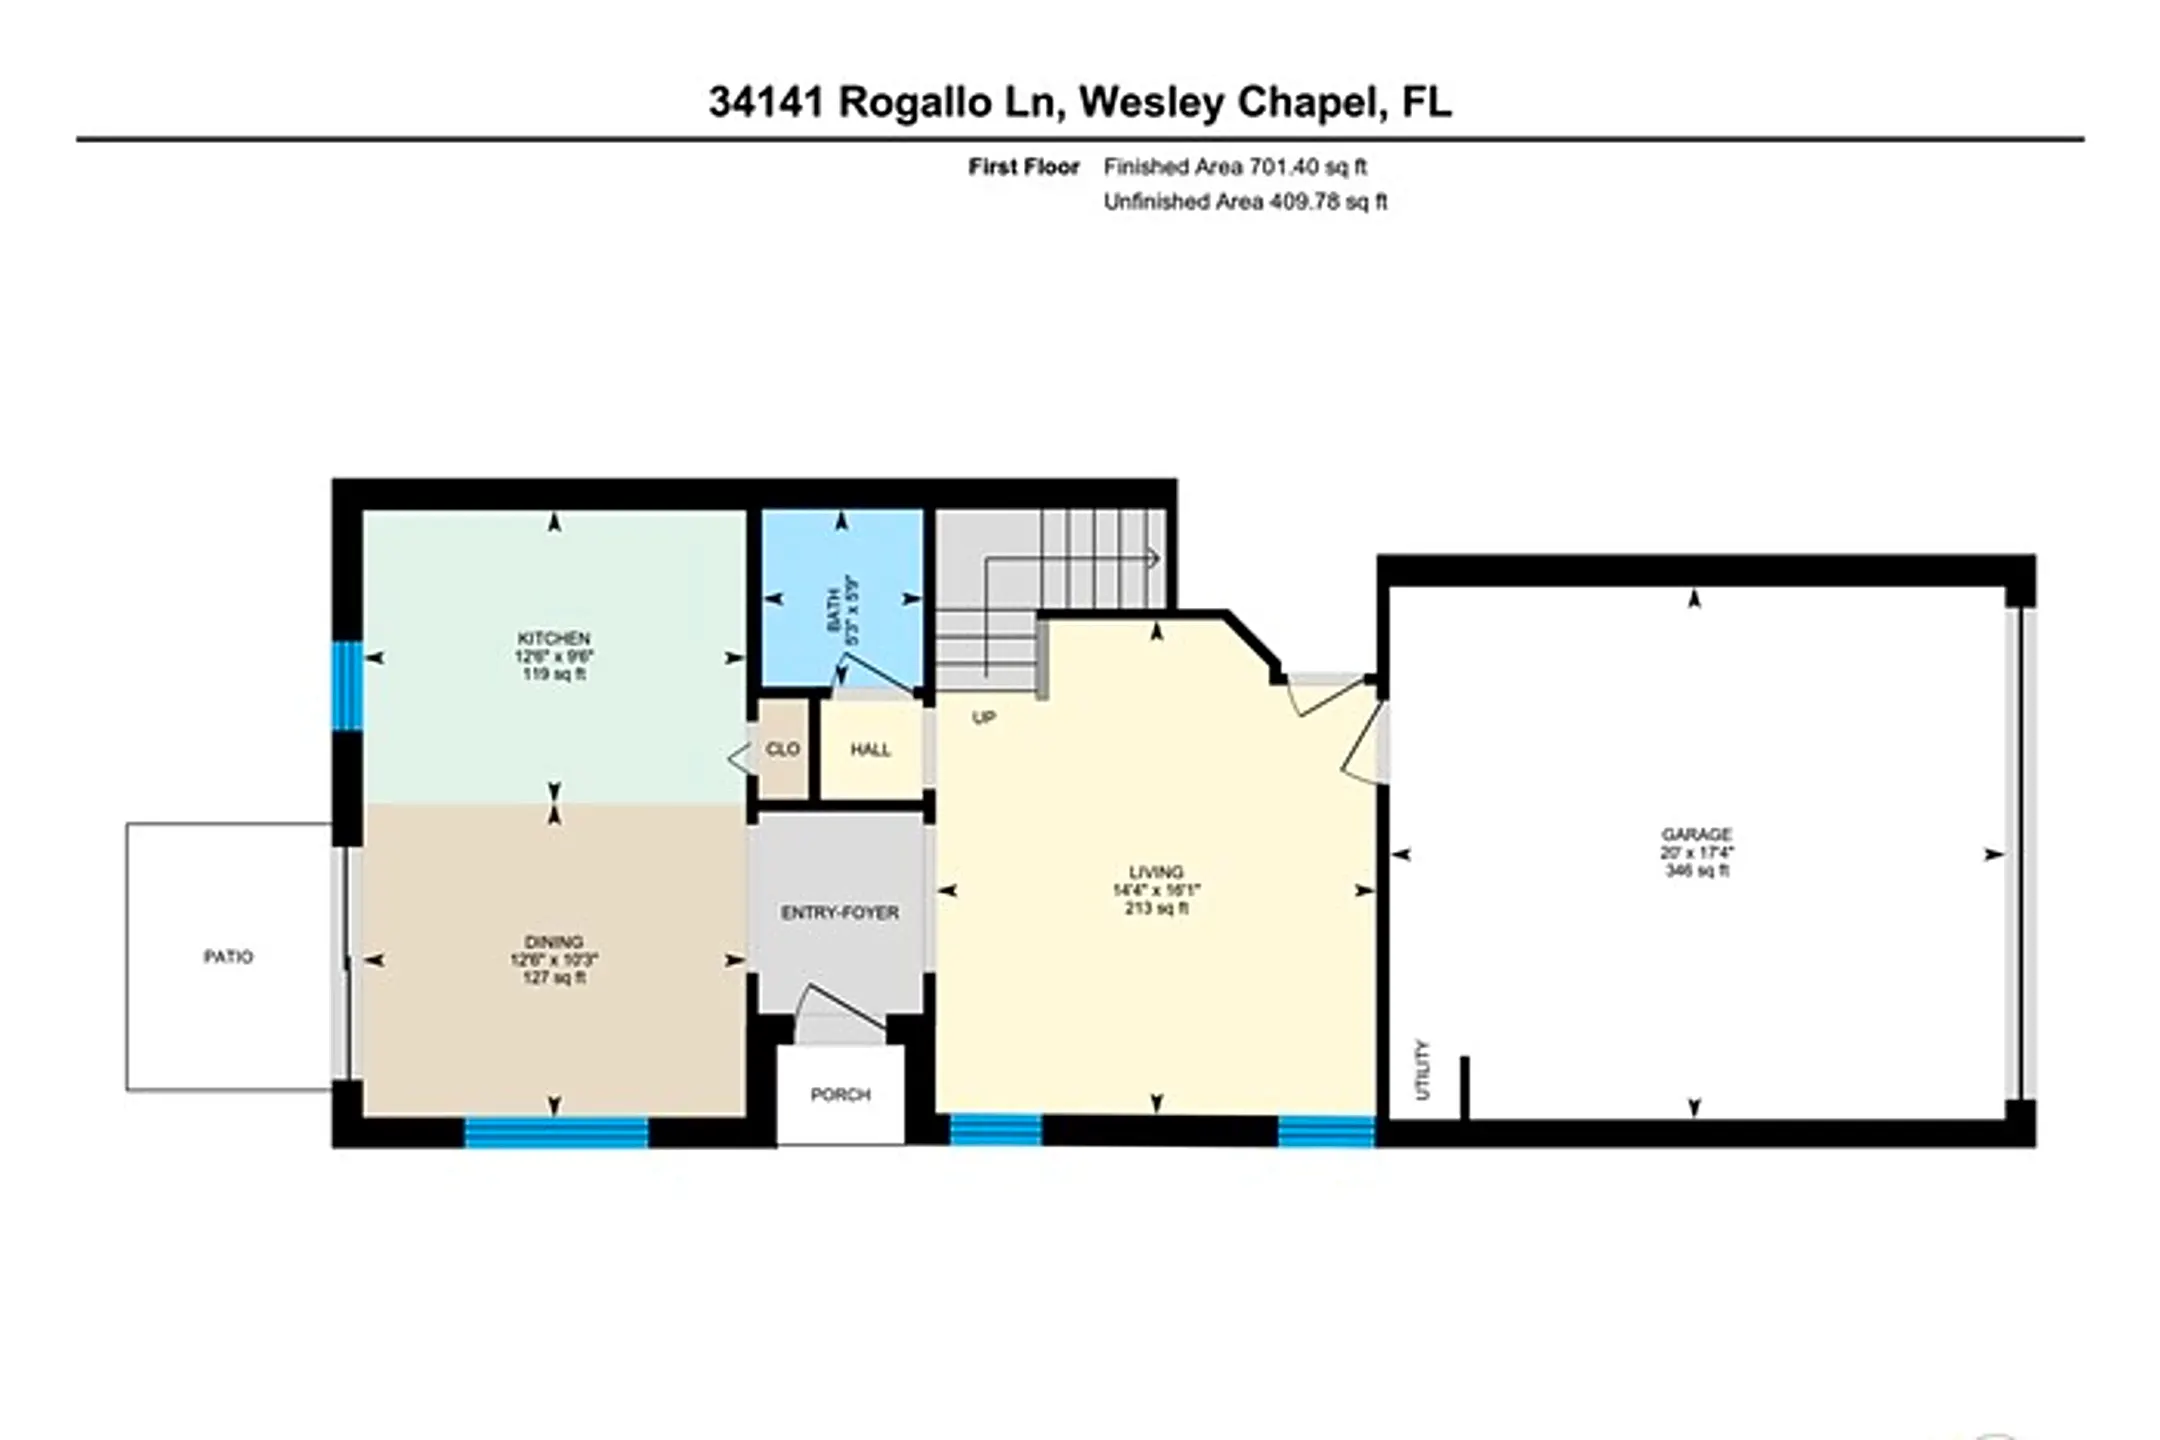 Pool - 34141 Rogallo Ln - Wesley Chapel, FL